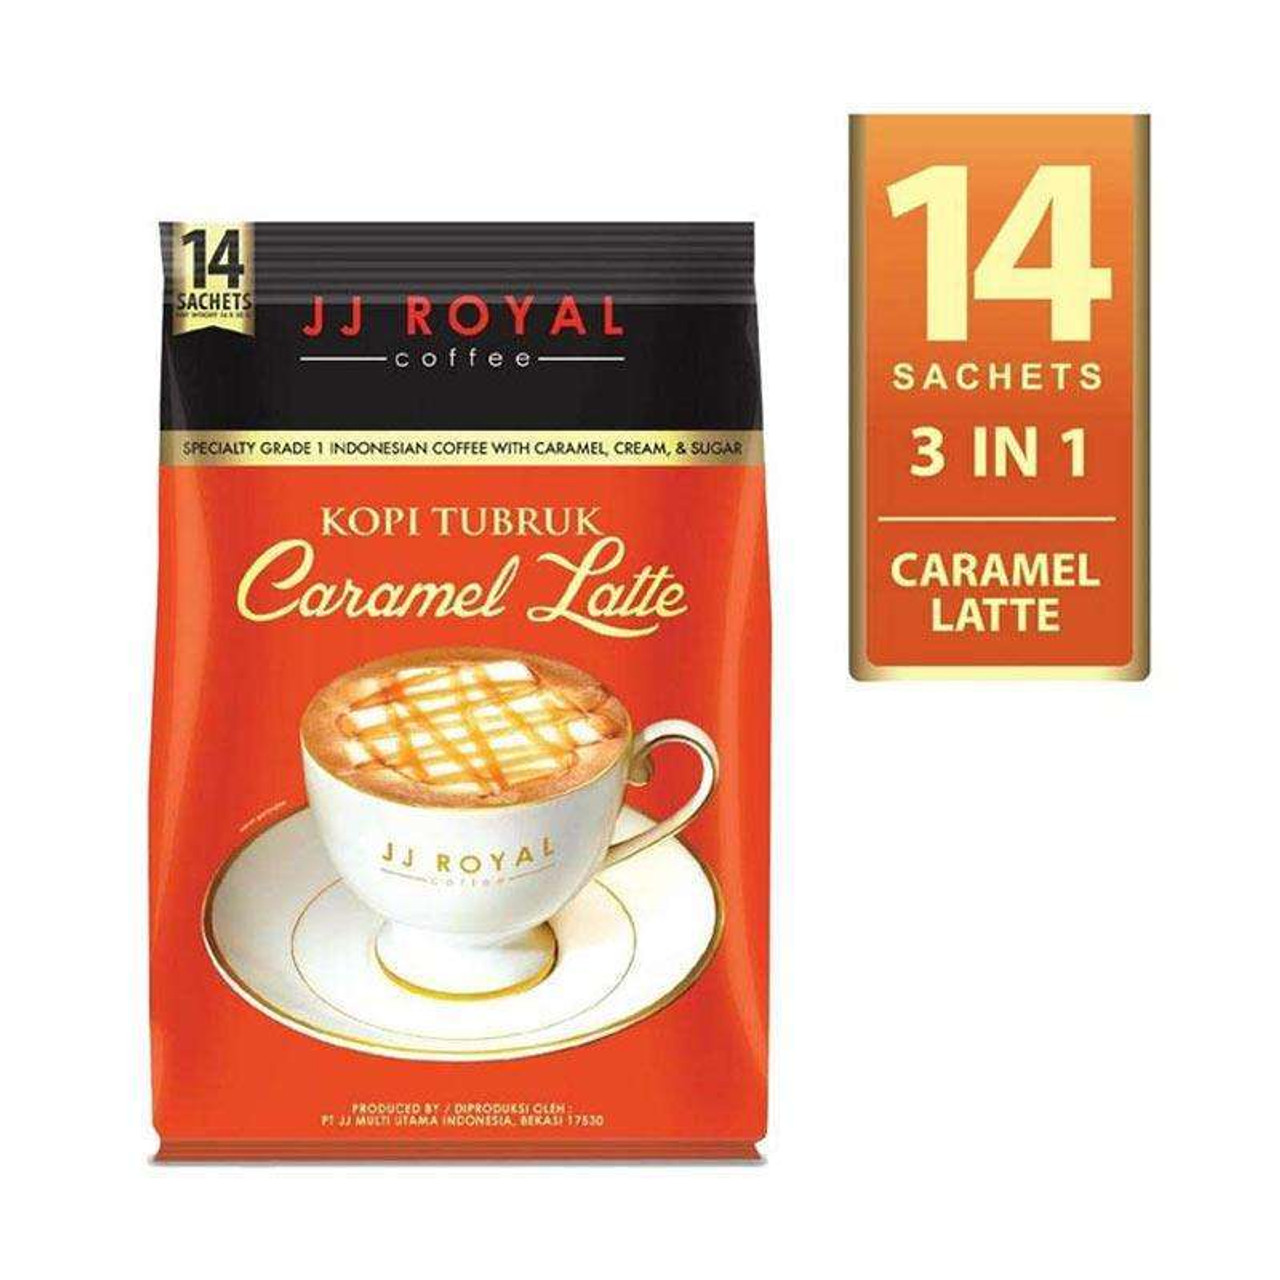 JJ Royal Kopi Tubruk Caramel Latte, 14 sachets @ 30 Gram